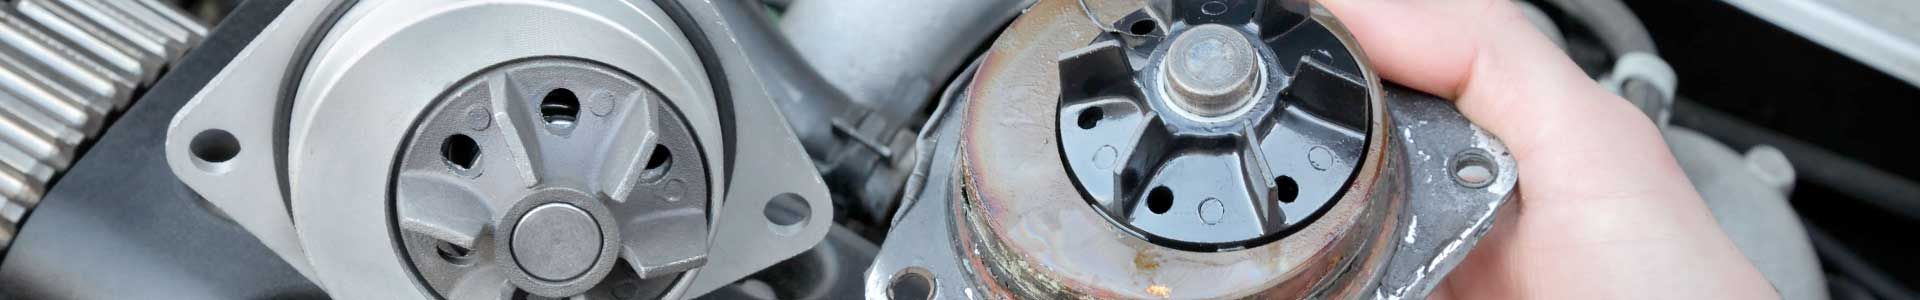 Water Pump Repair Service in Tempe, AZ - Bullitt Automotive